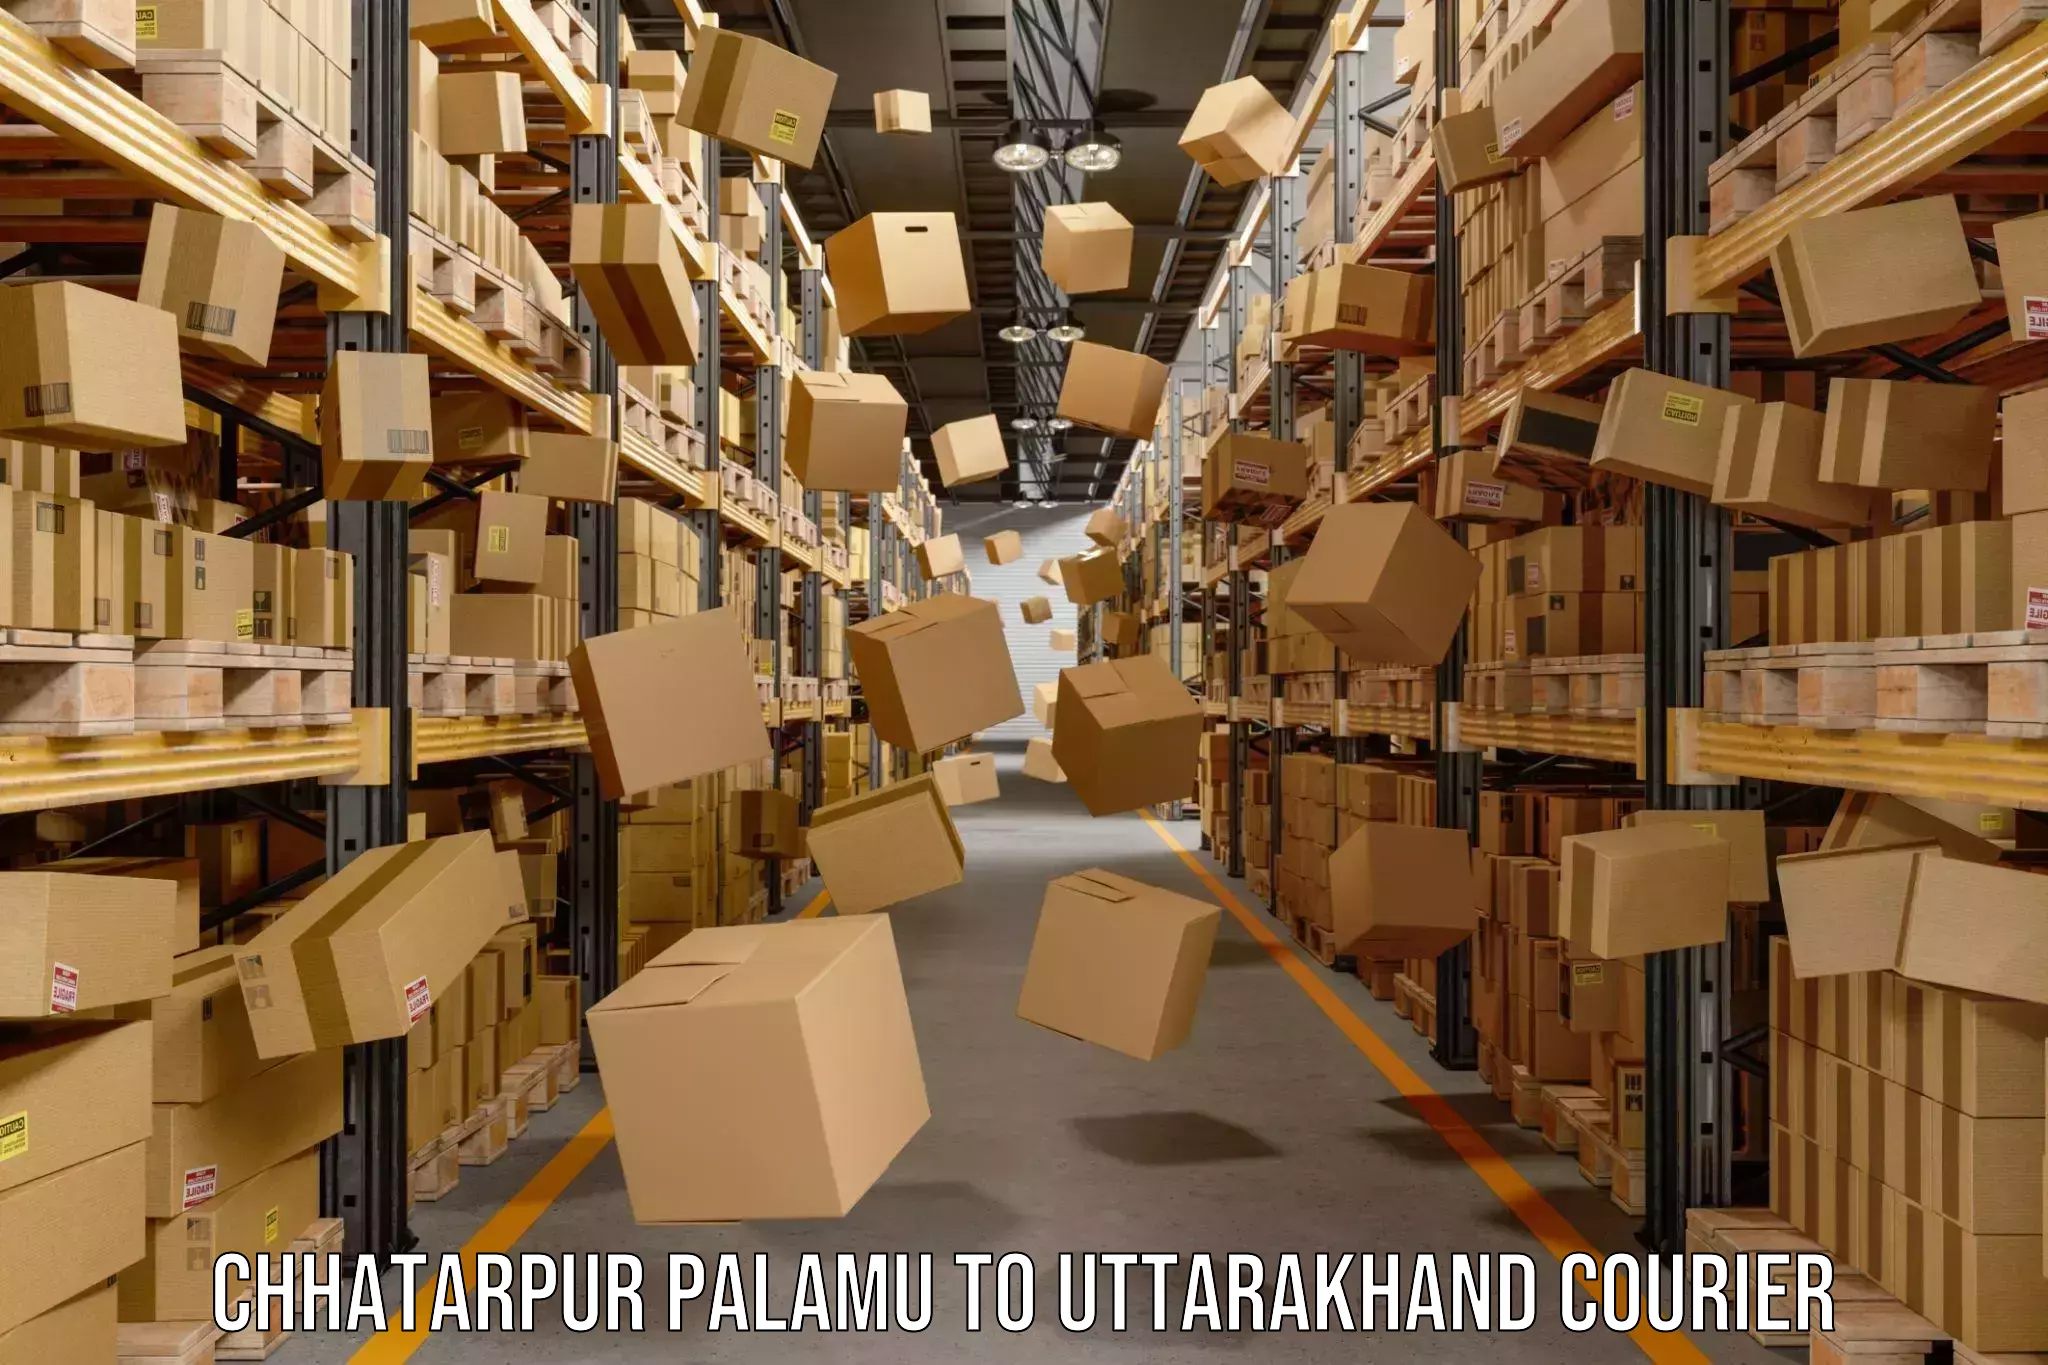 Courier service comparison Chhatarpur Palamu to Didihat